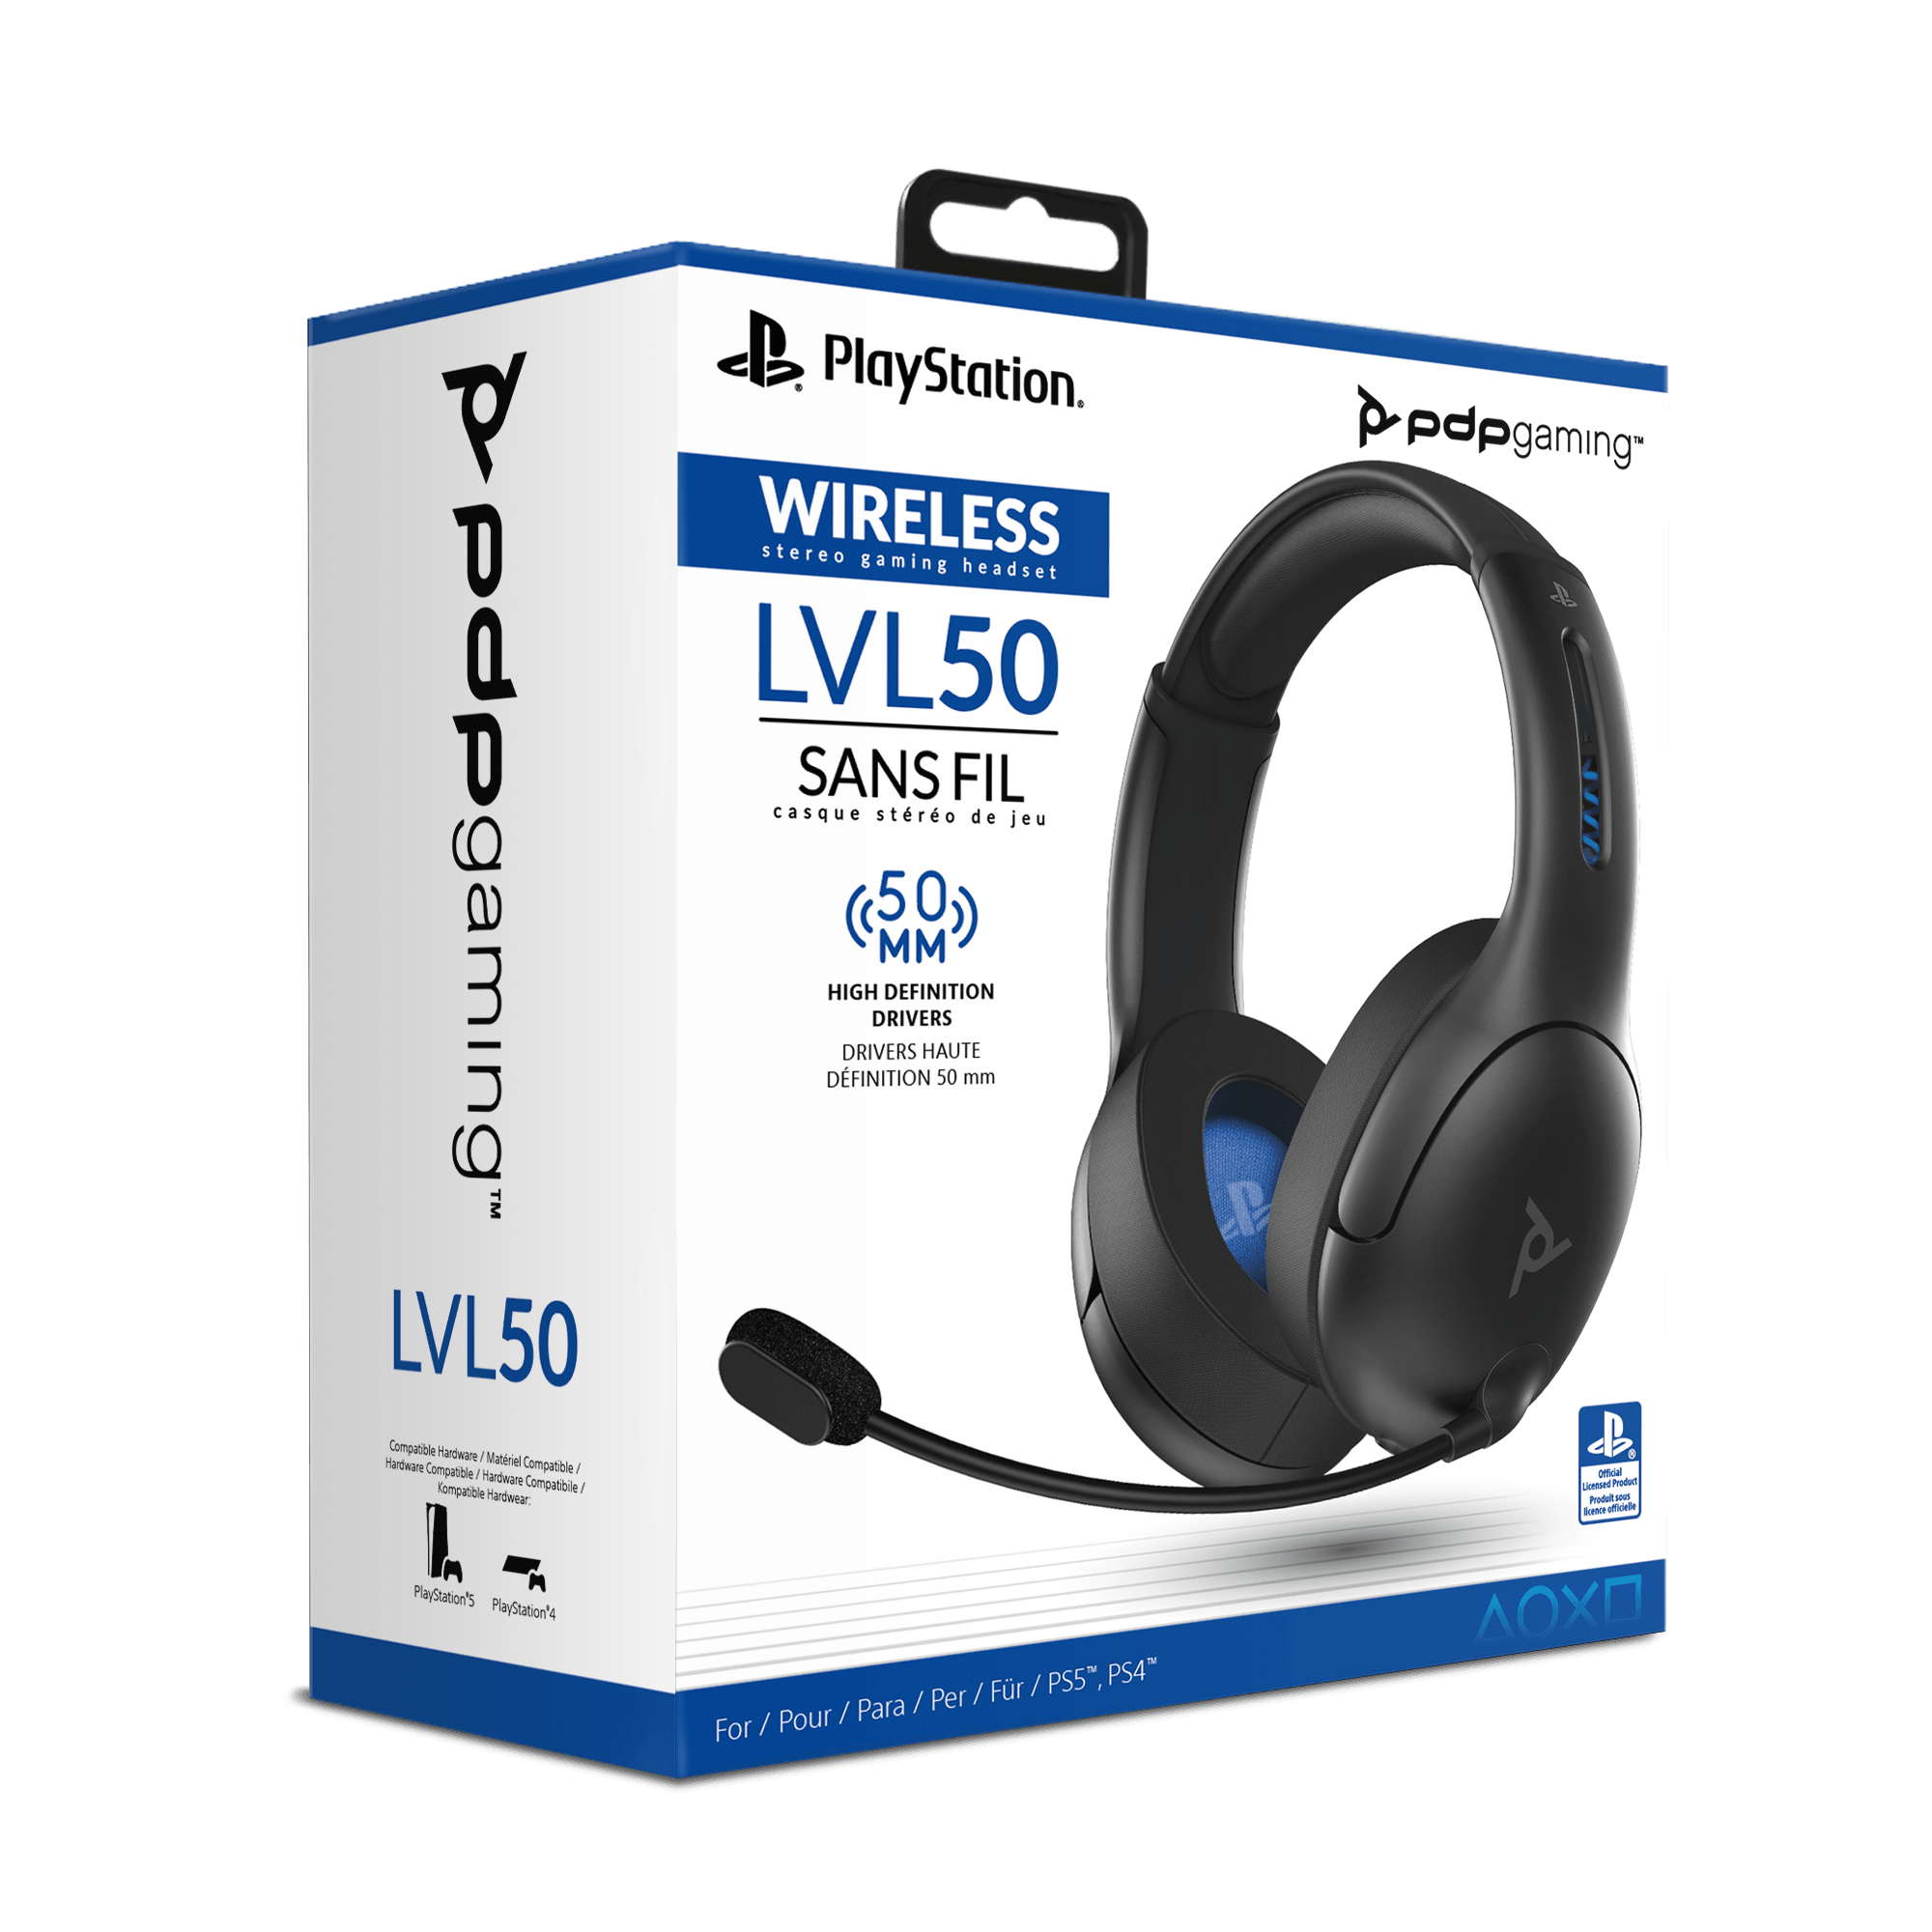 Wireless Lvl 50 Headset - Want a New Gadget